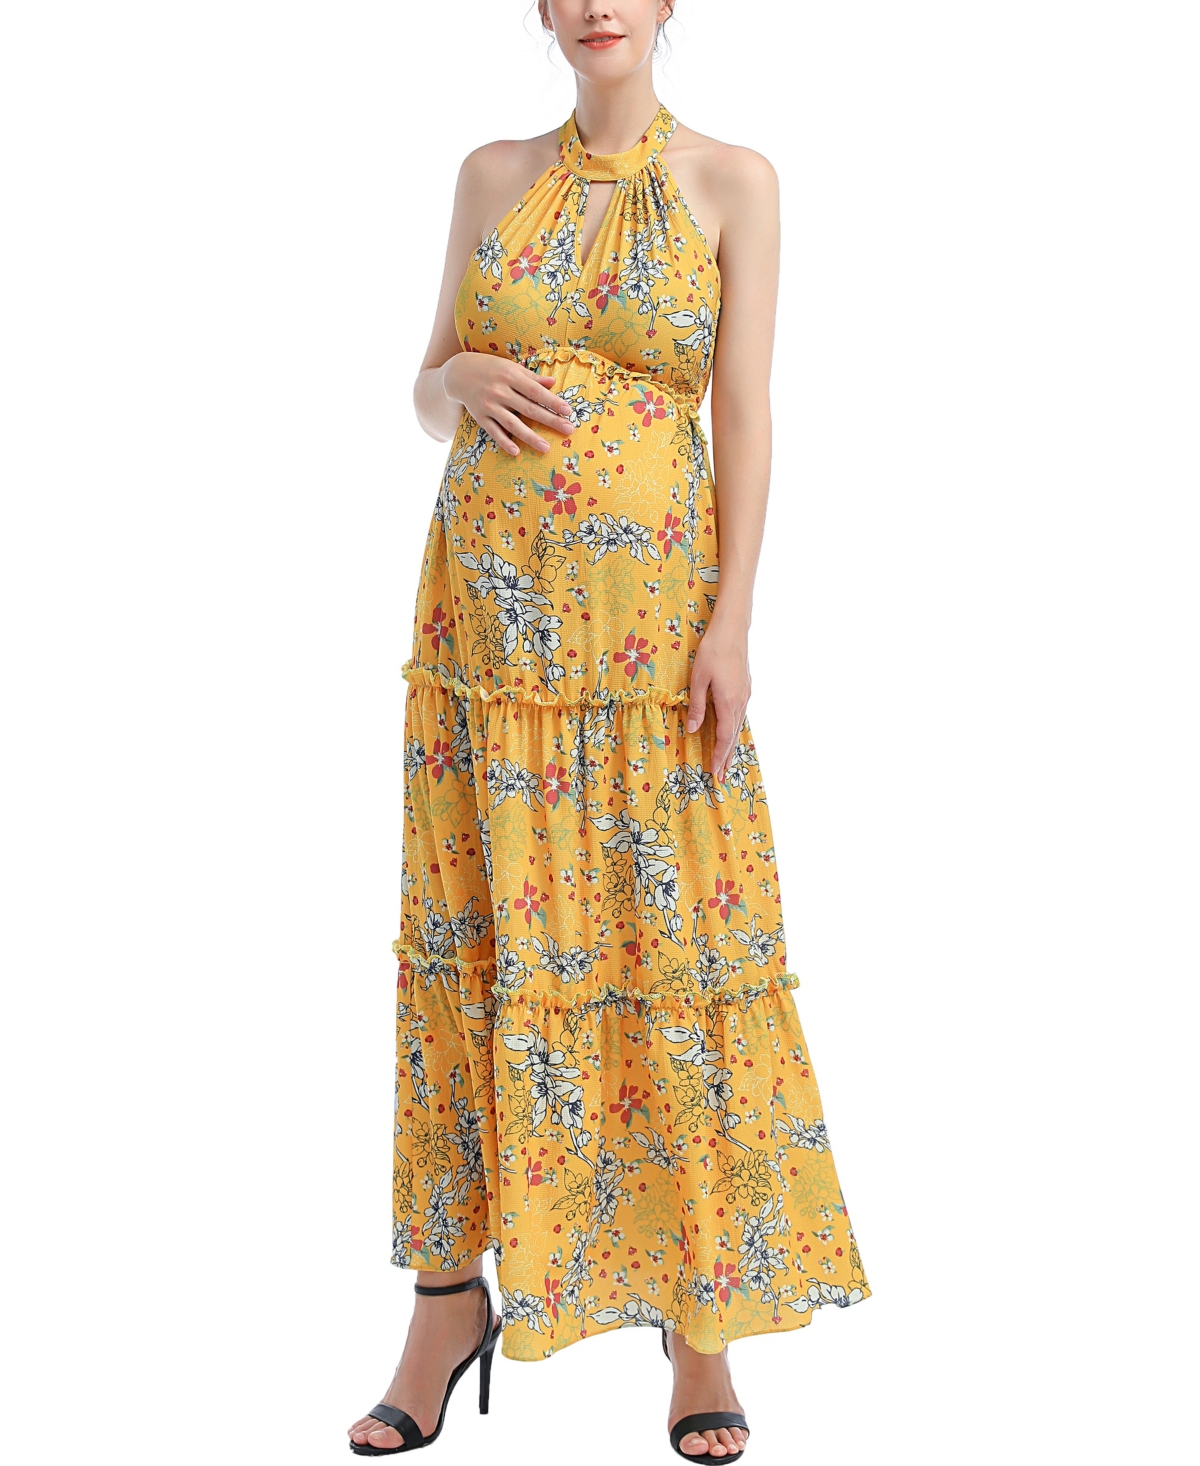 kimi + kai Maternity Soleil Floral Print Maxi Dress - Multicolored